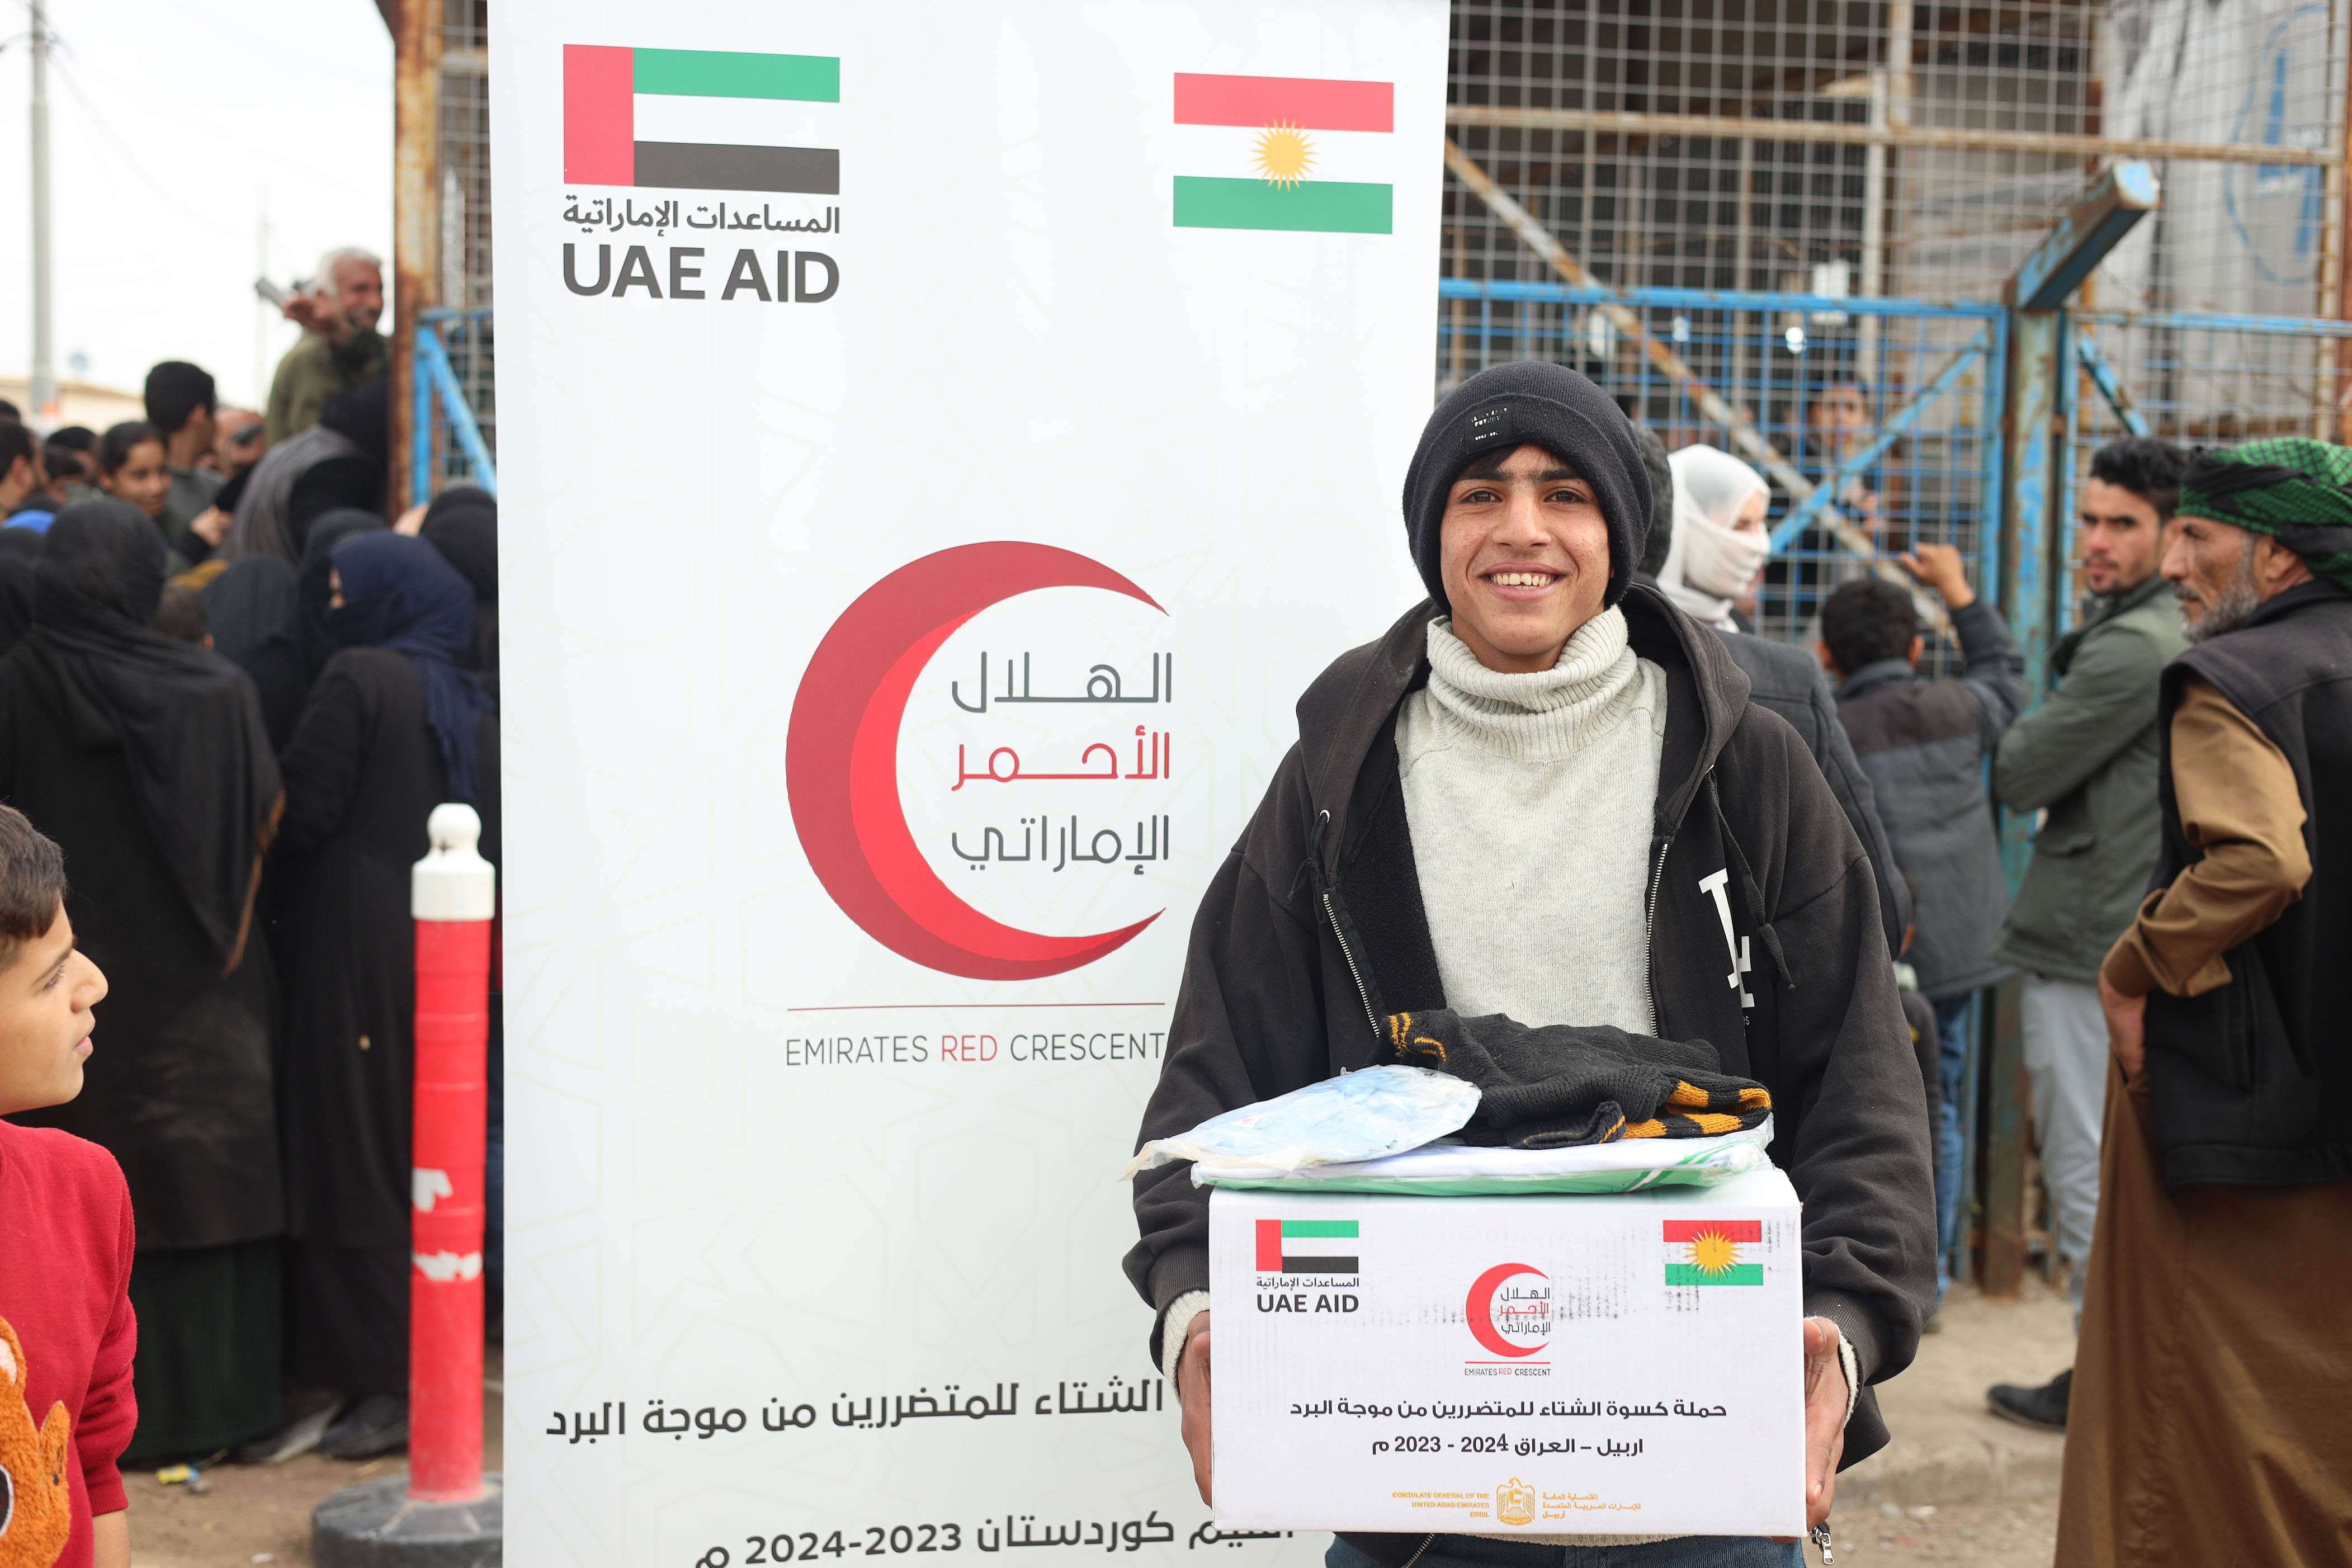 10,000 people benefit from erc winter aid in kurdistan, iraq